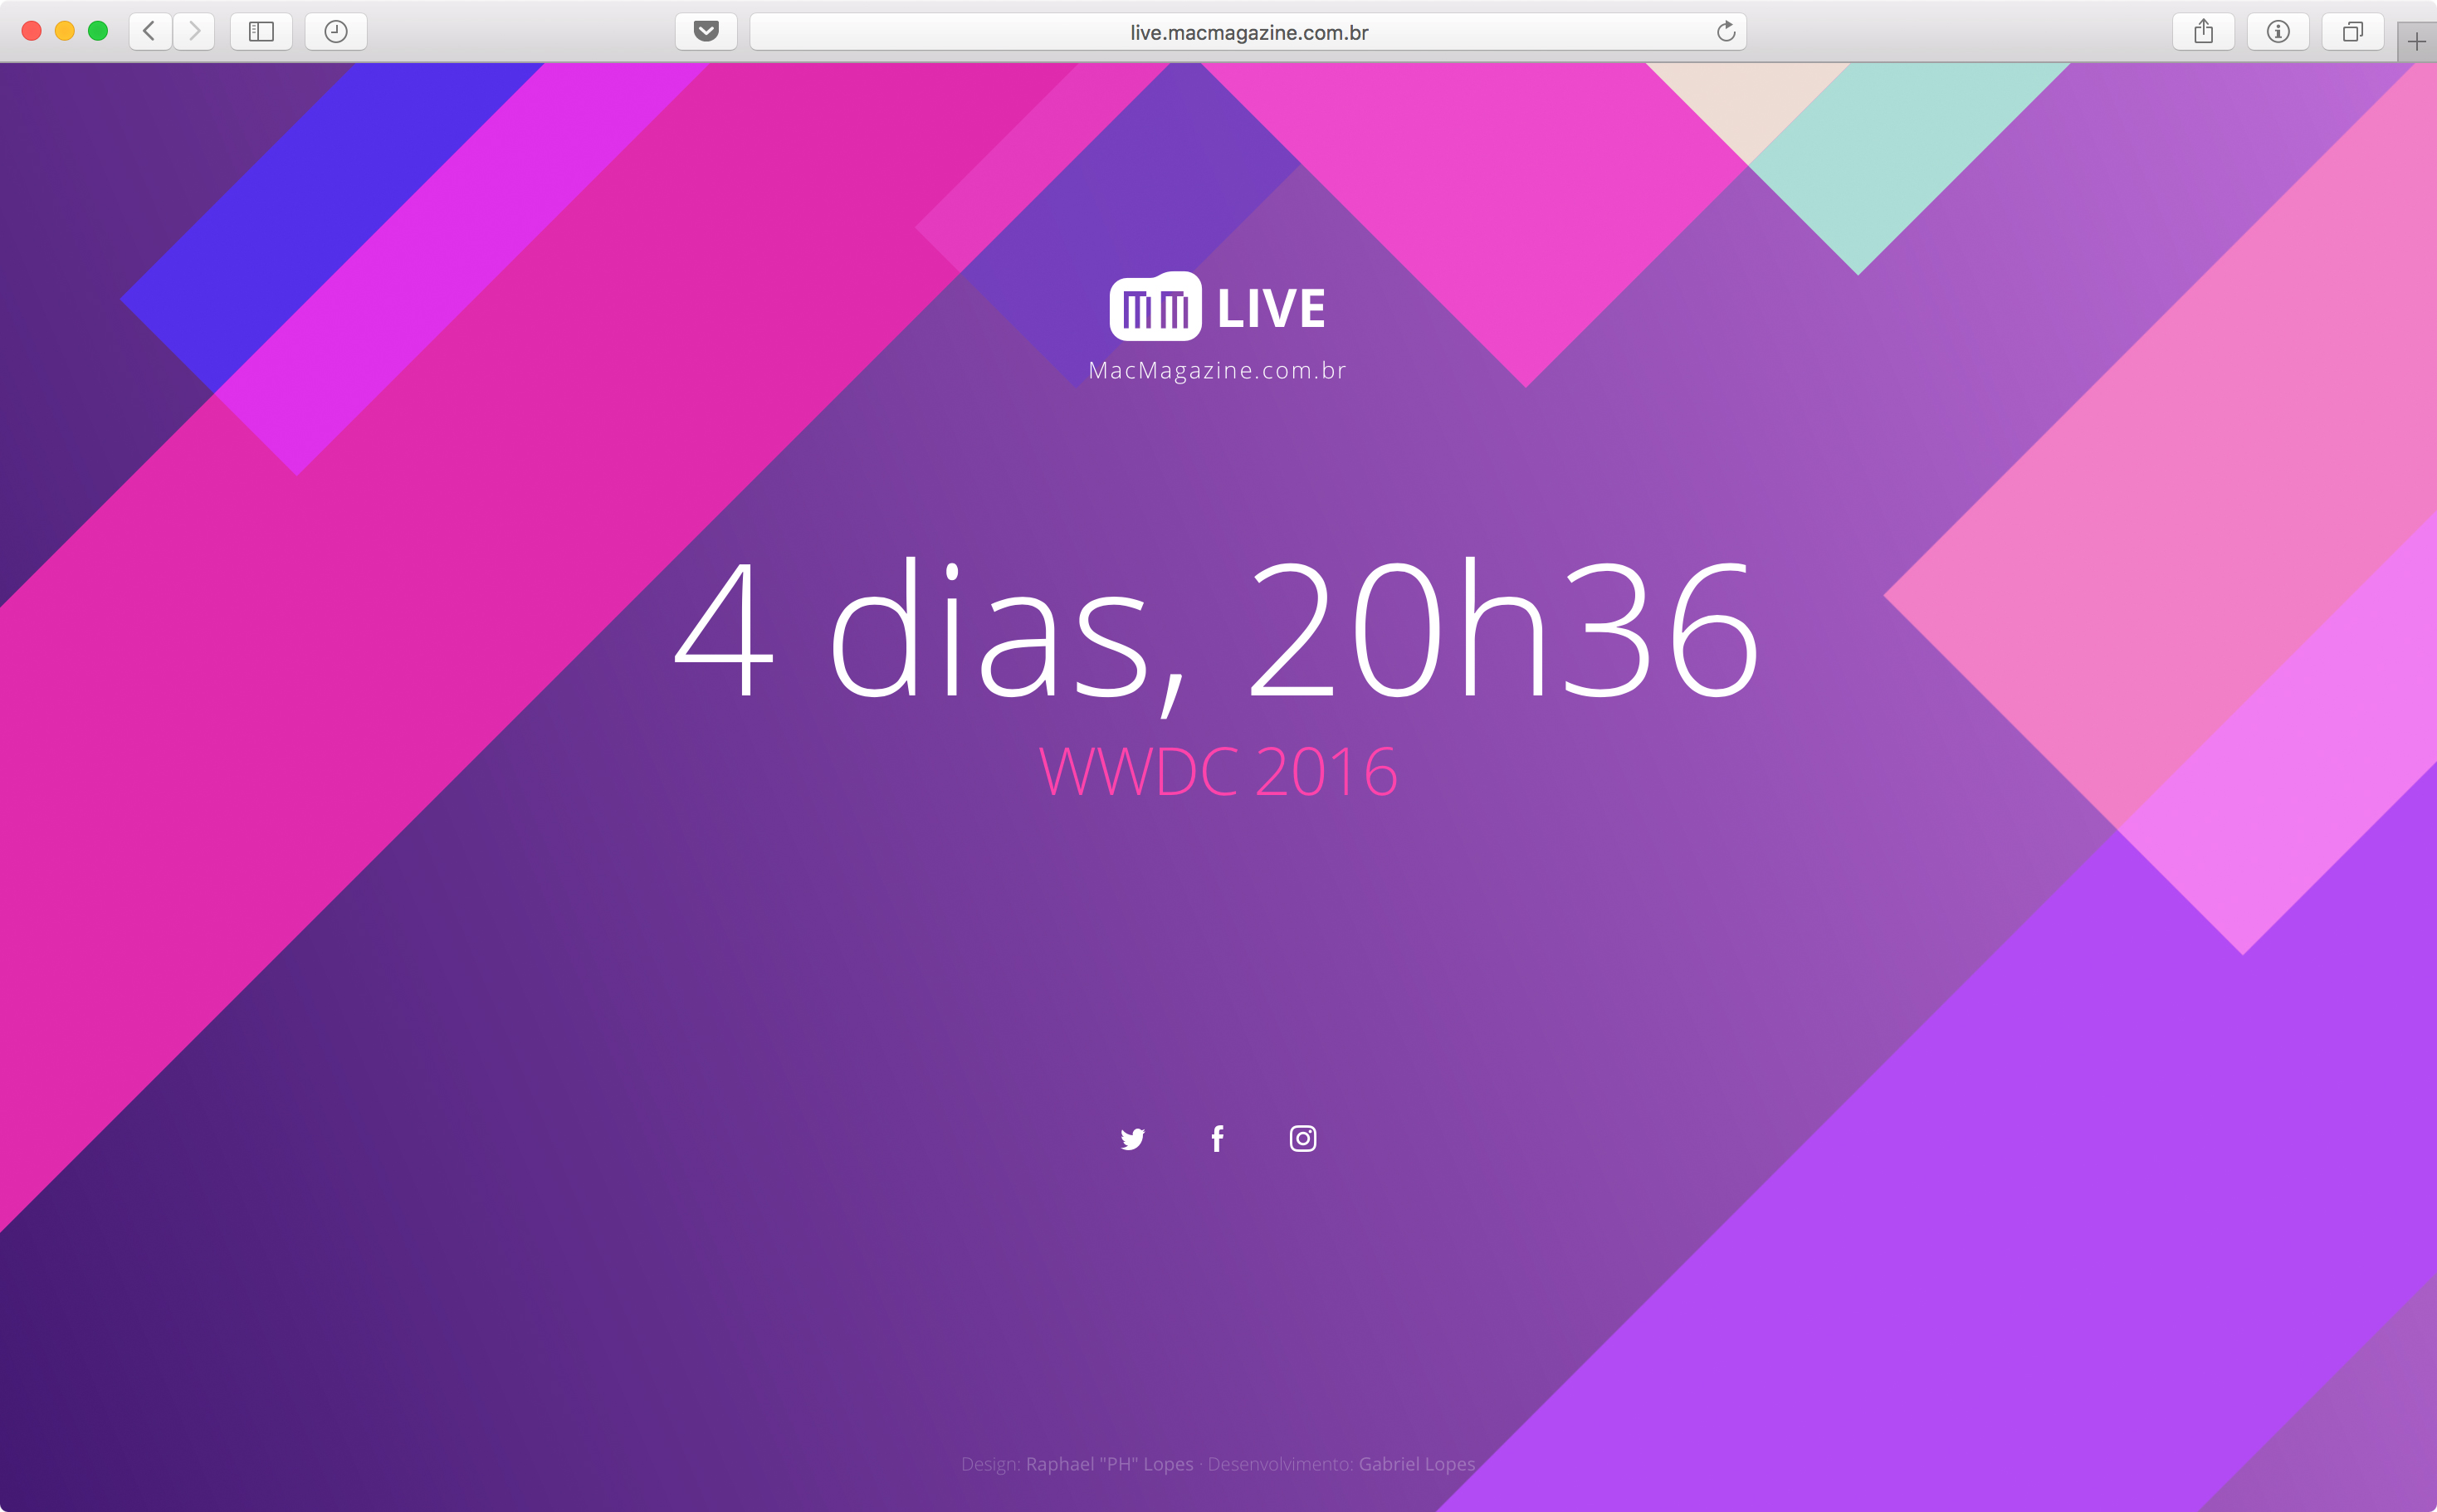 Novo MM Live - WWDC 2016